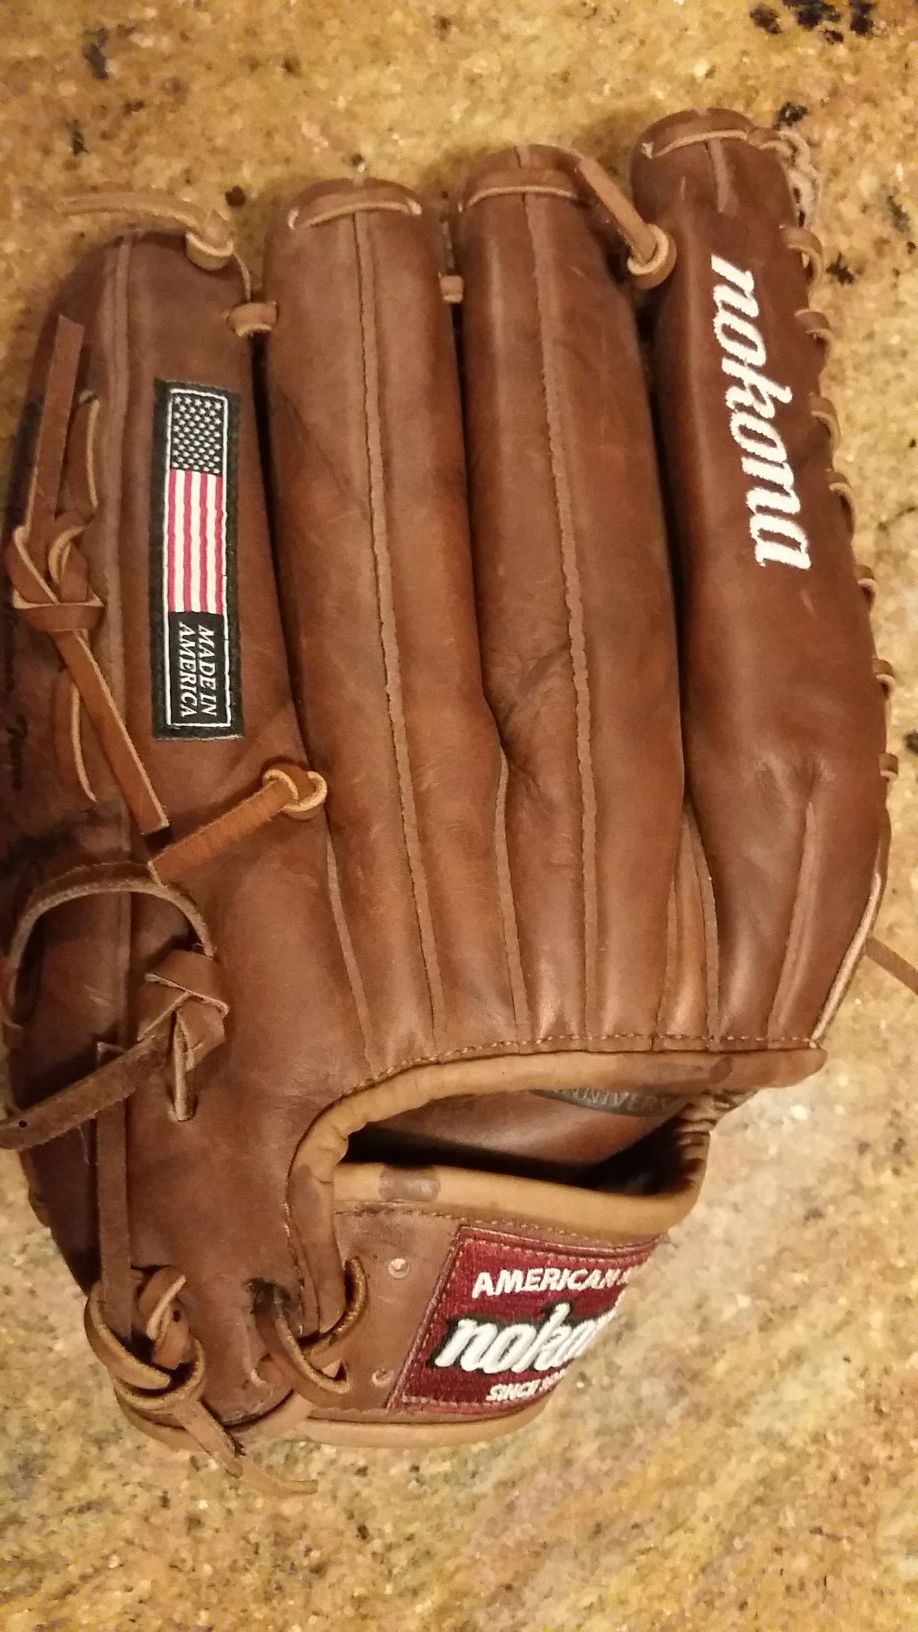 New Nokona Baseball glove